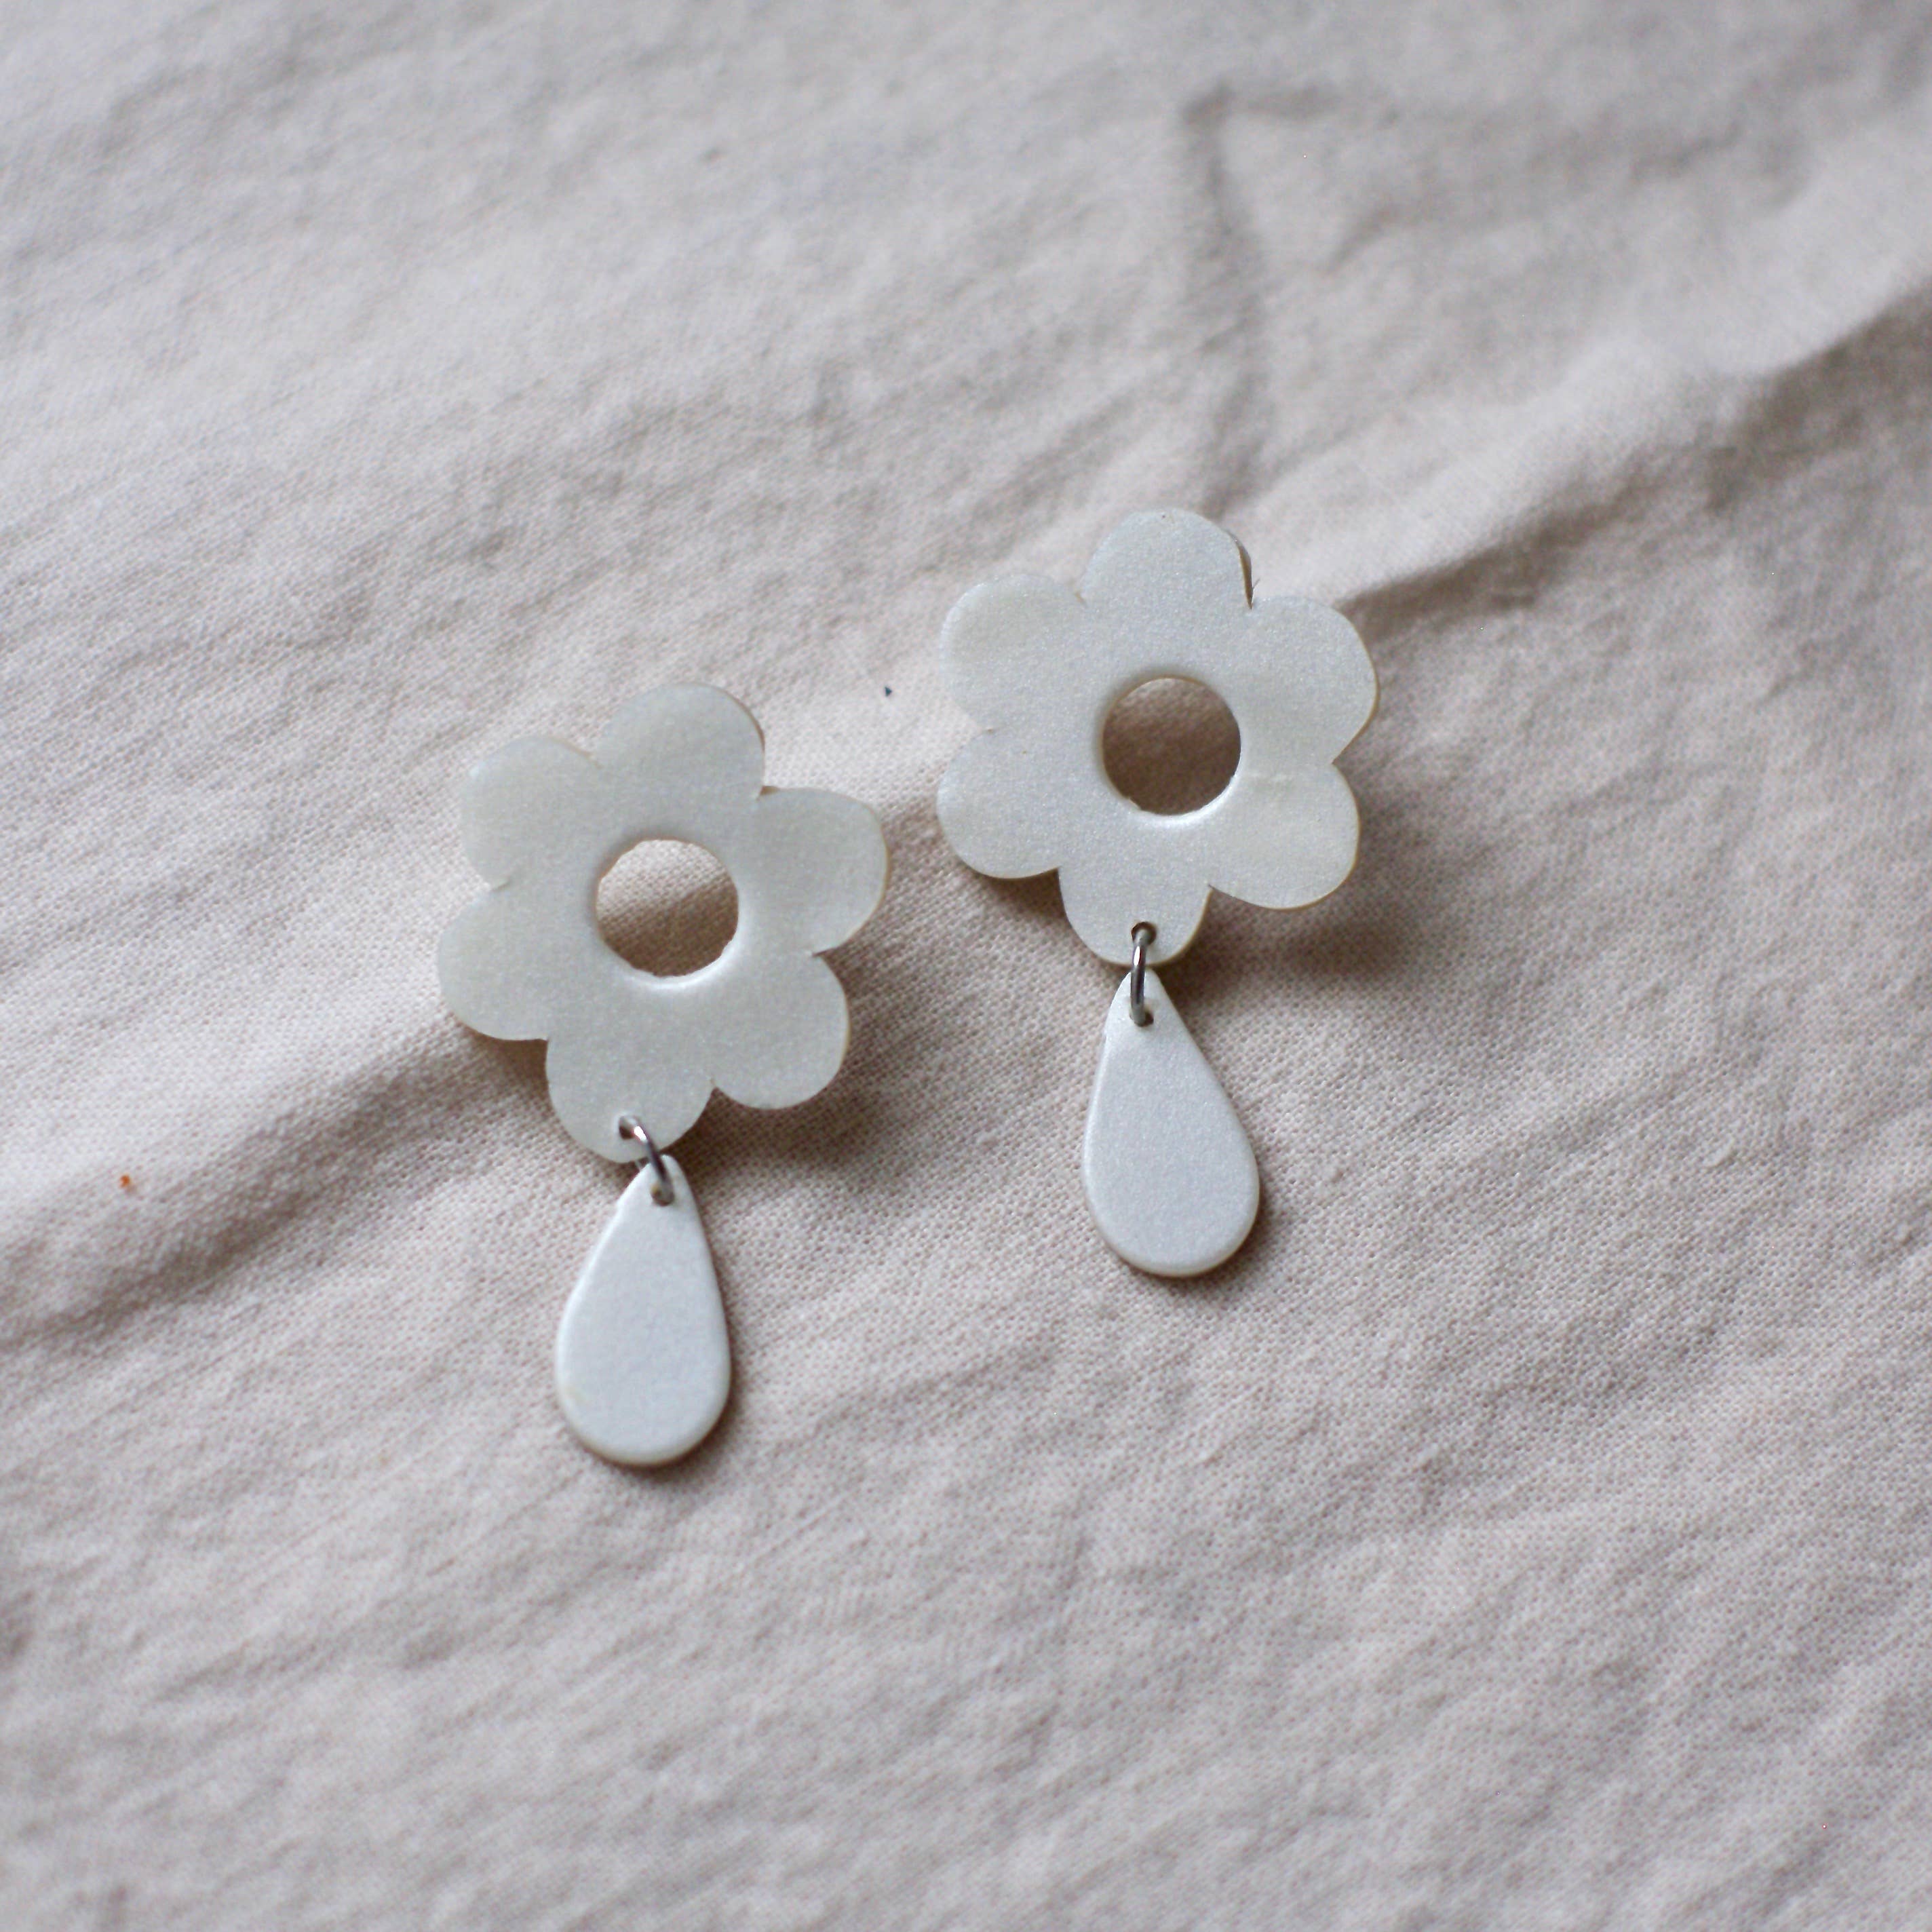 Beige Tan Stone Simple Statement Earrings  Minimalist and Modern Jewelry  Polymer Clay Earrings  Drop Circle Earrings